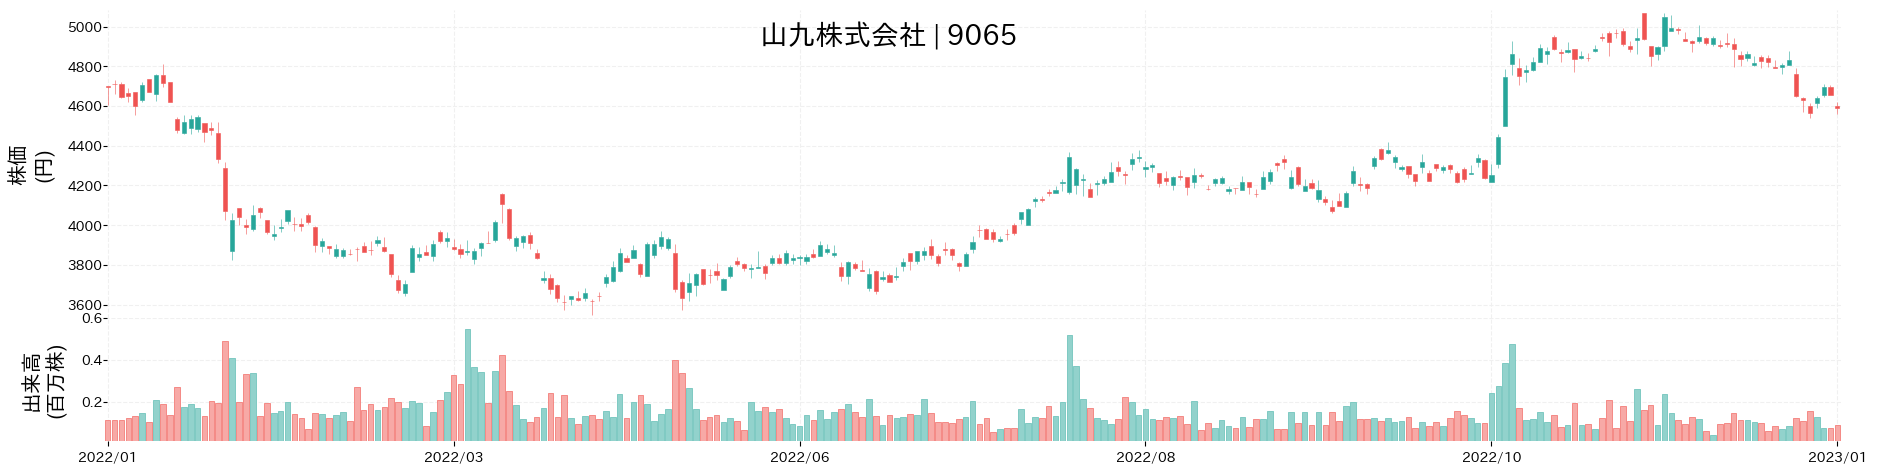 山九の株価推移(2022)